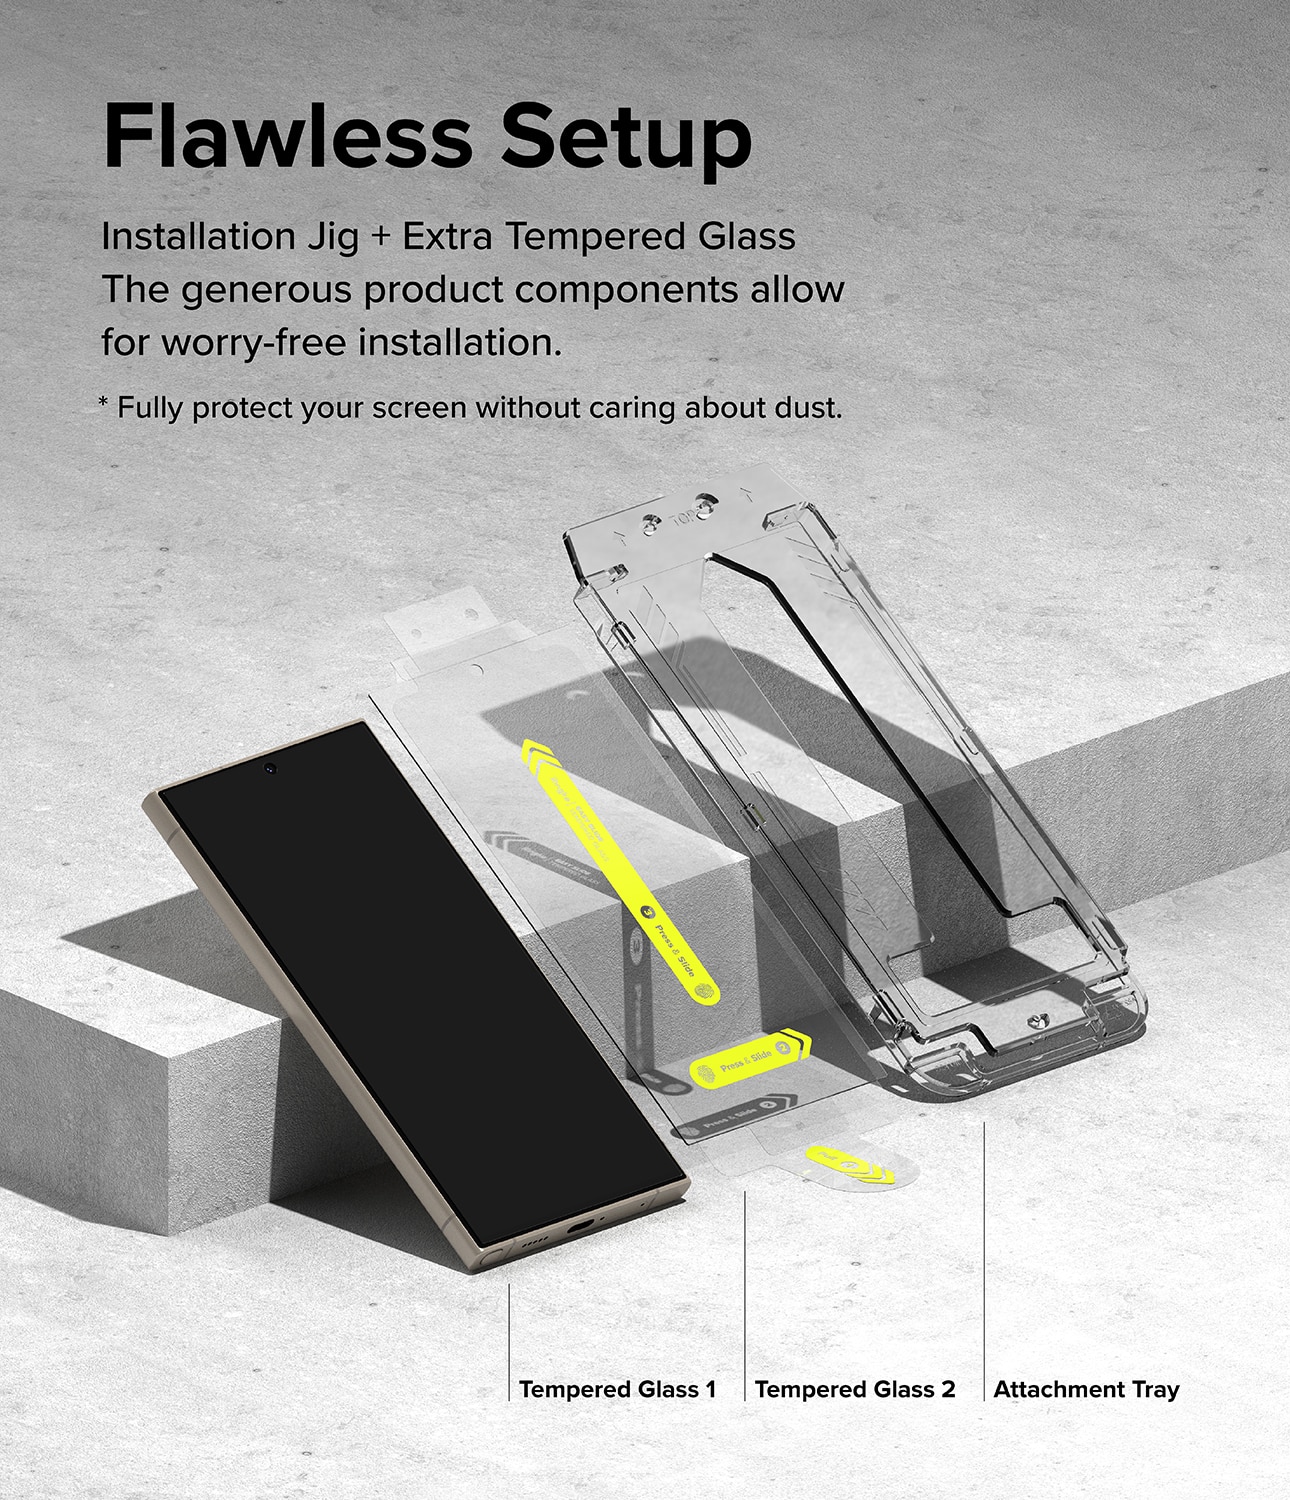 Easy Slide Glass (2 pièces) Samsung Galaxy S24 Ultra